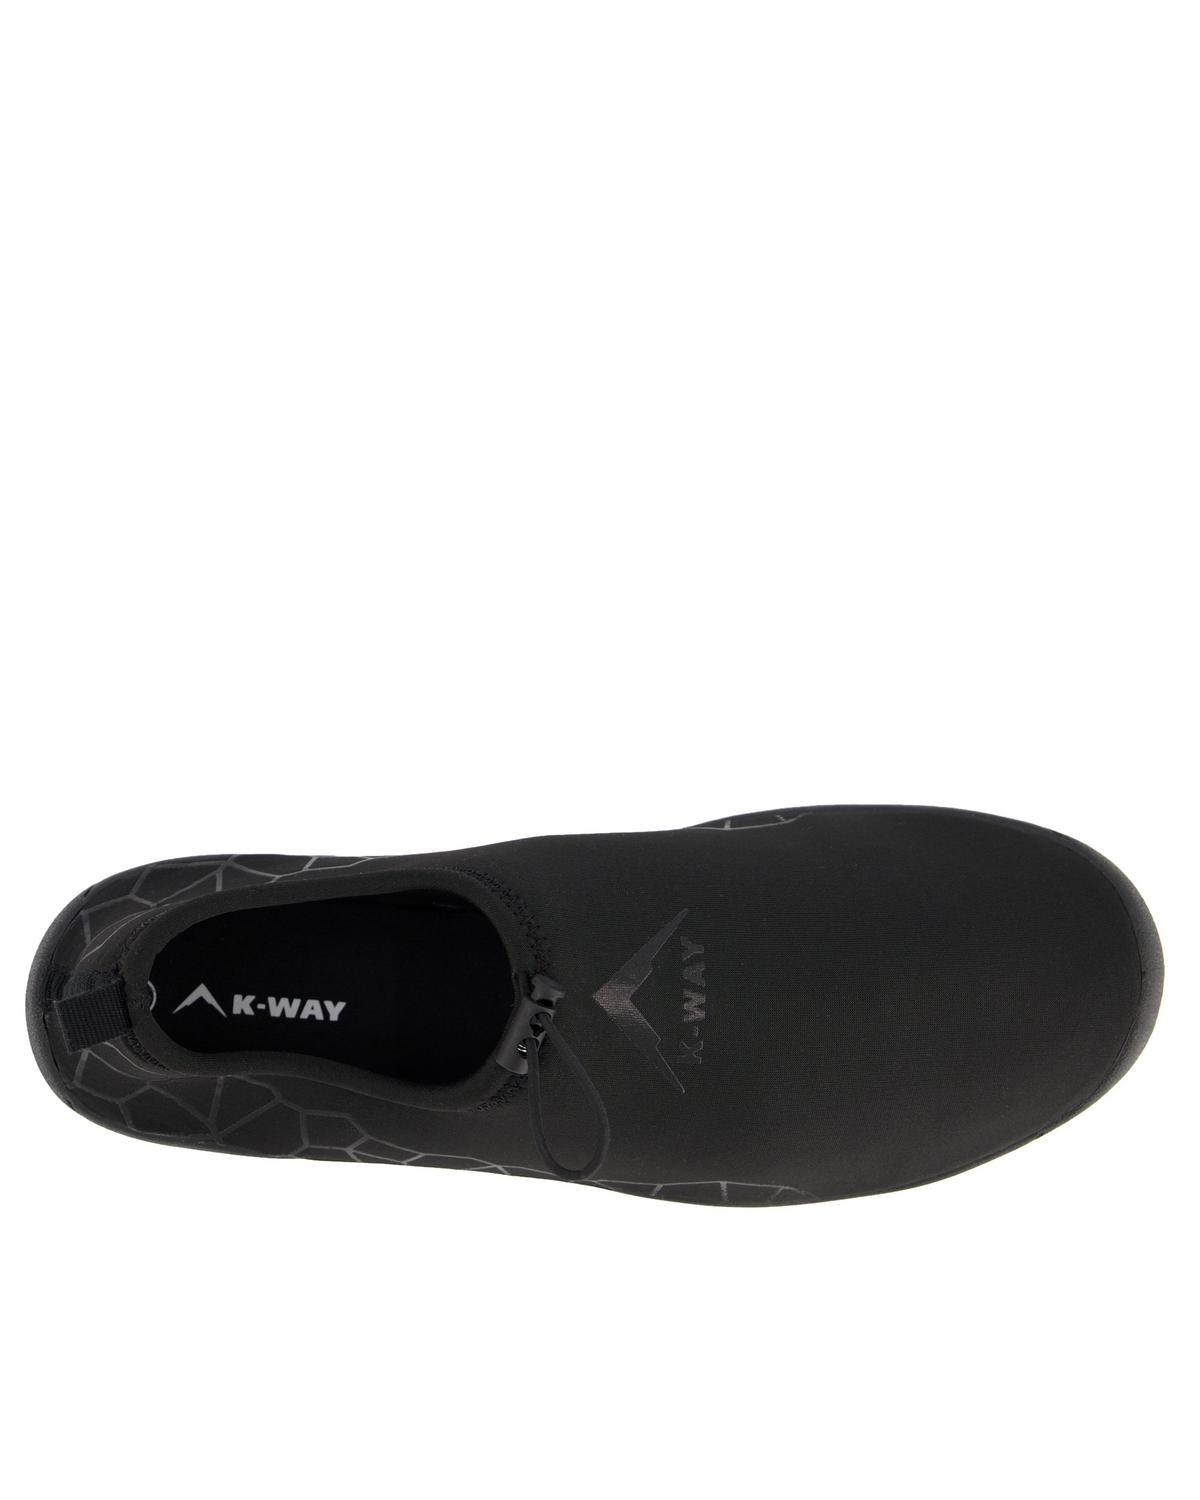 K-Way Unisex Aqua Shoes -  Black